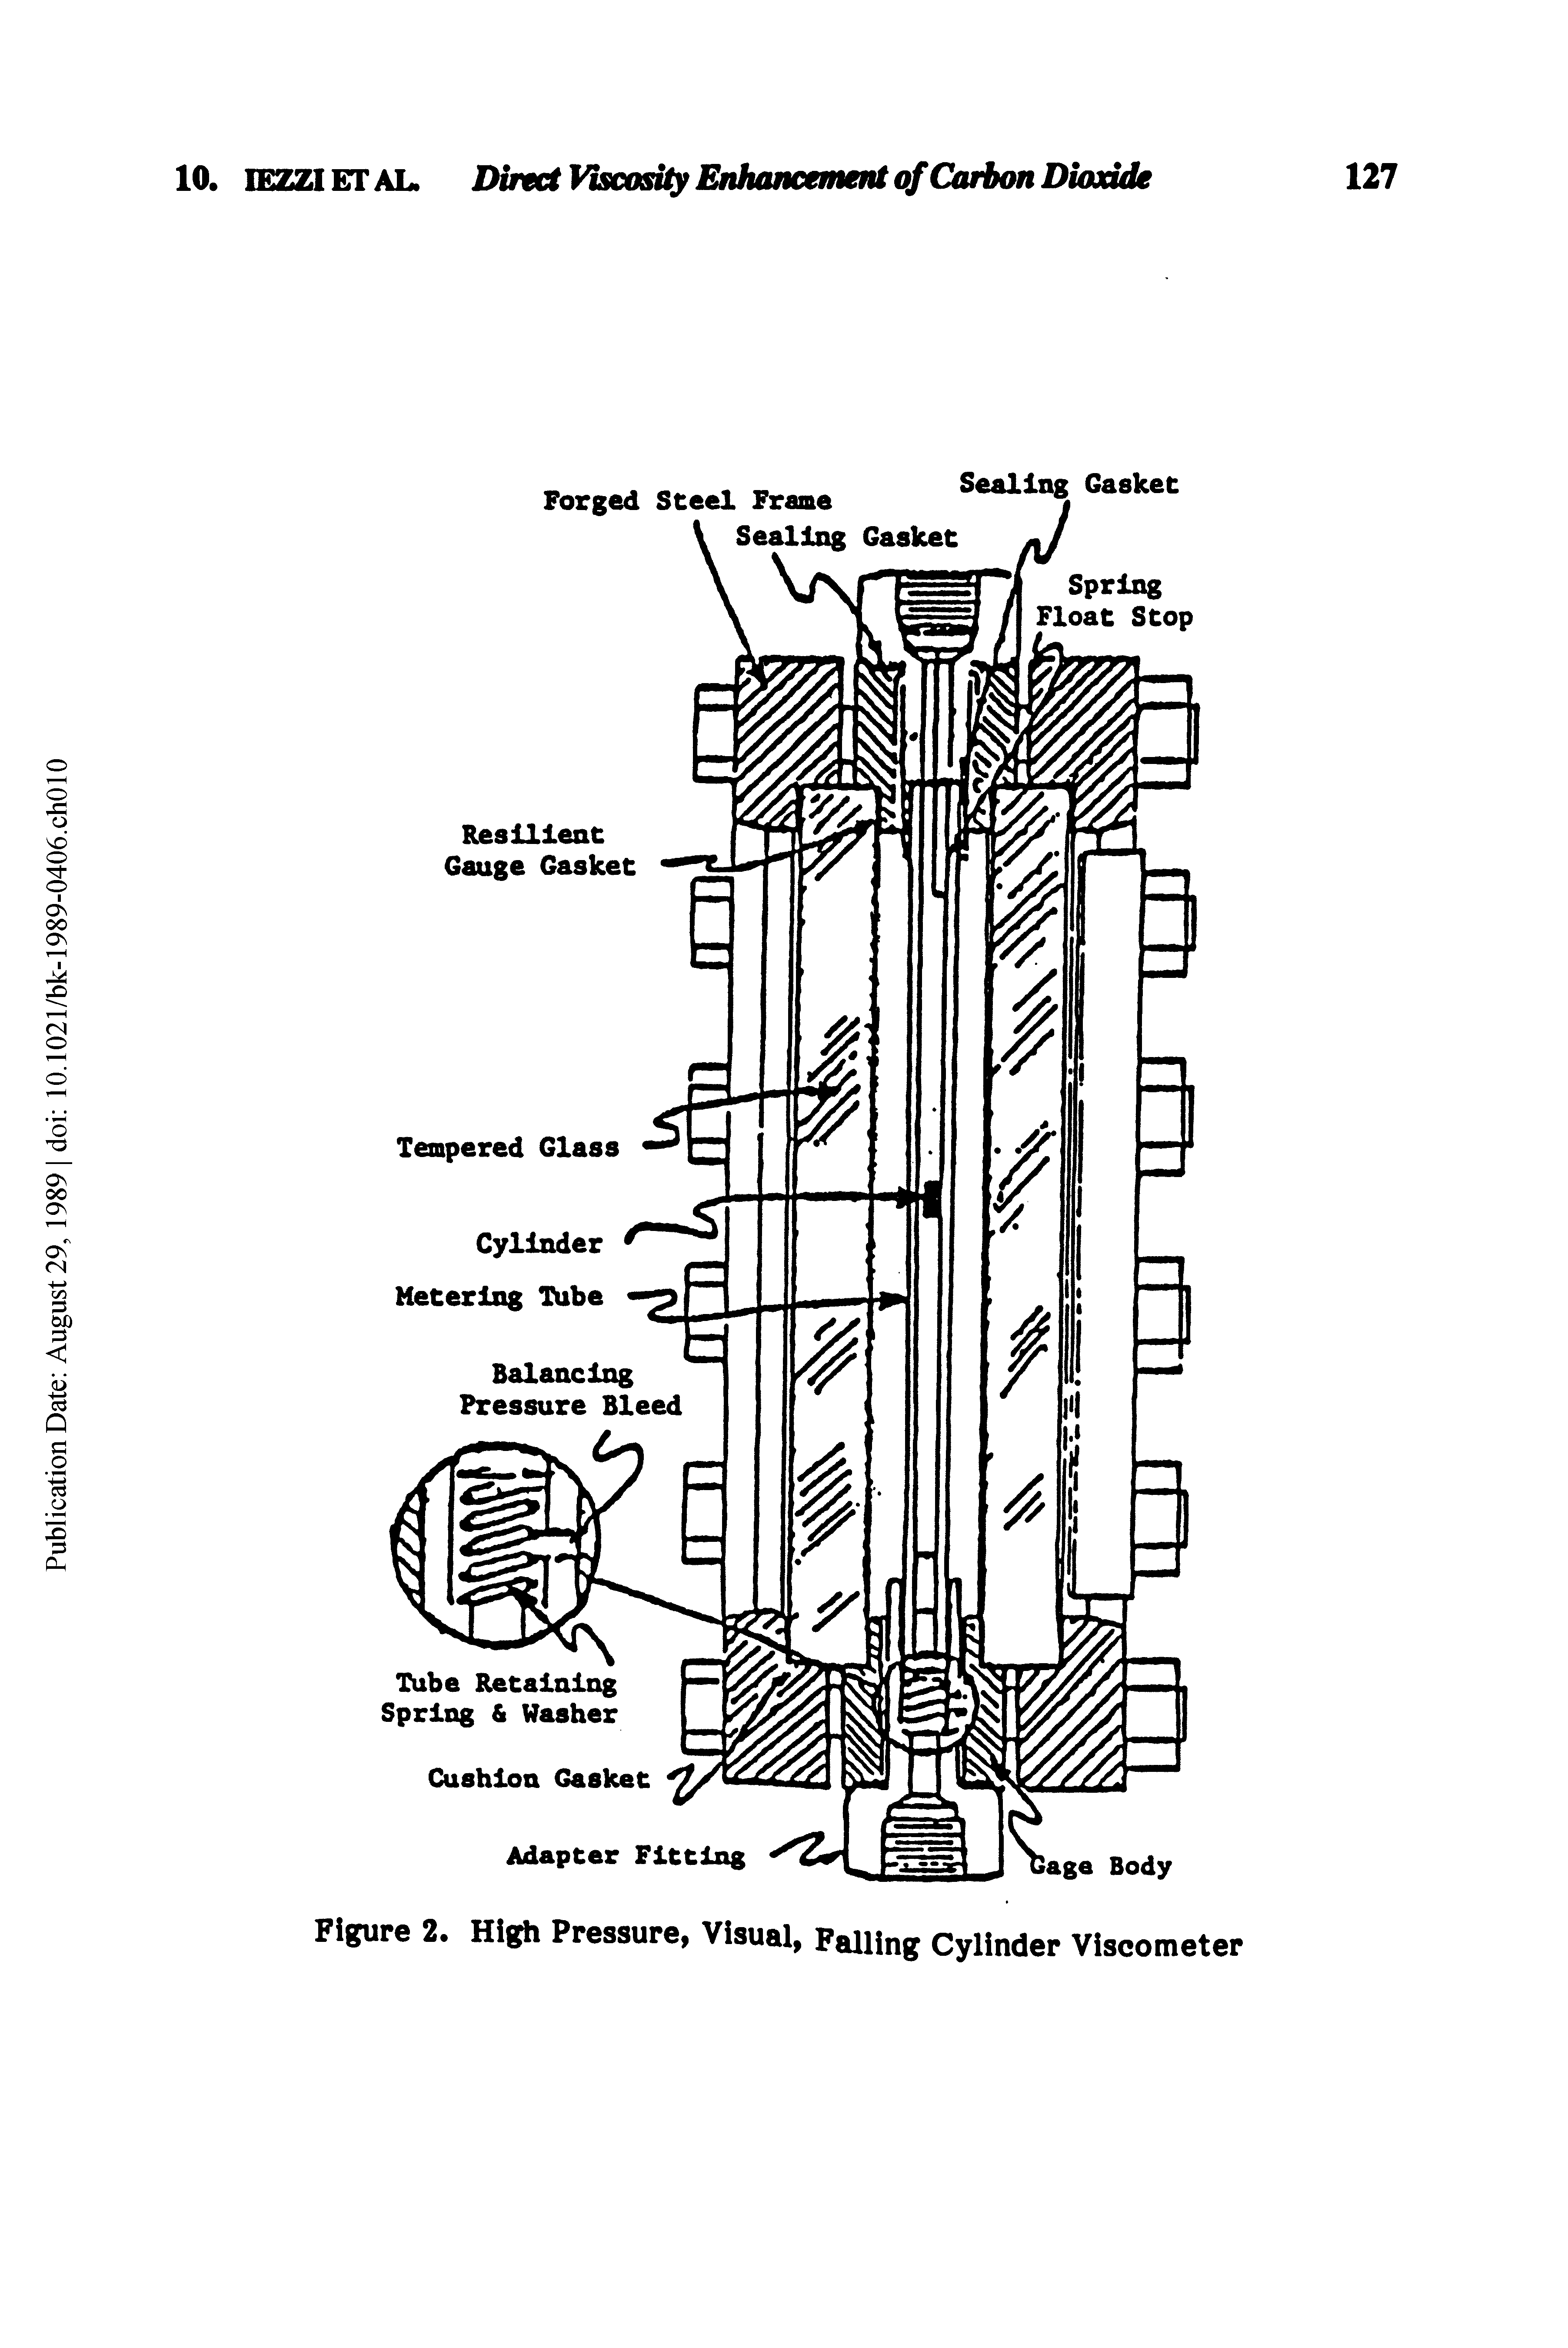 Figure 2. High Pressure, Visual, Falling Cylinder Viscometer...